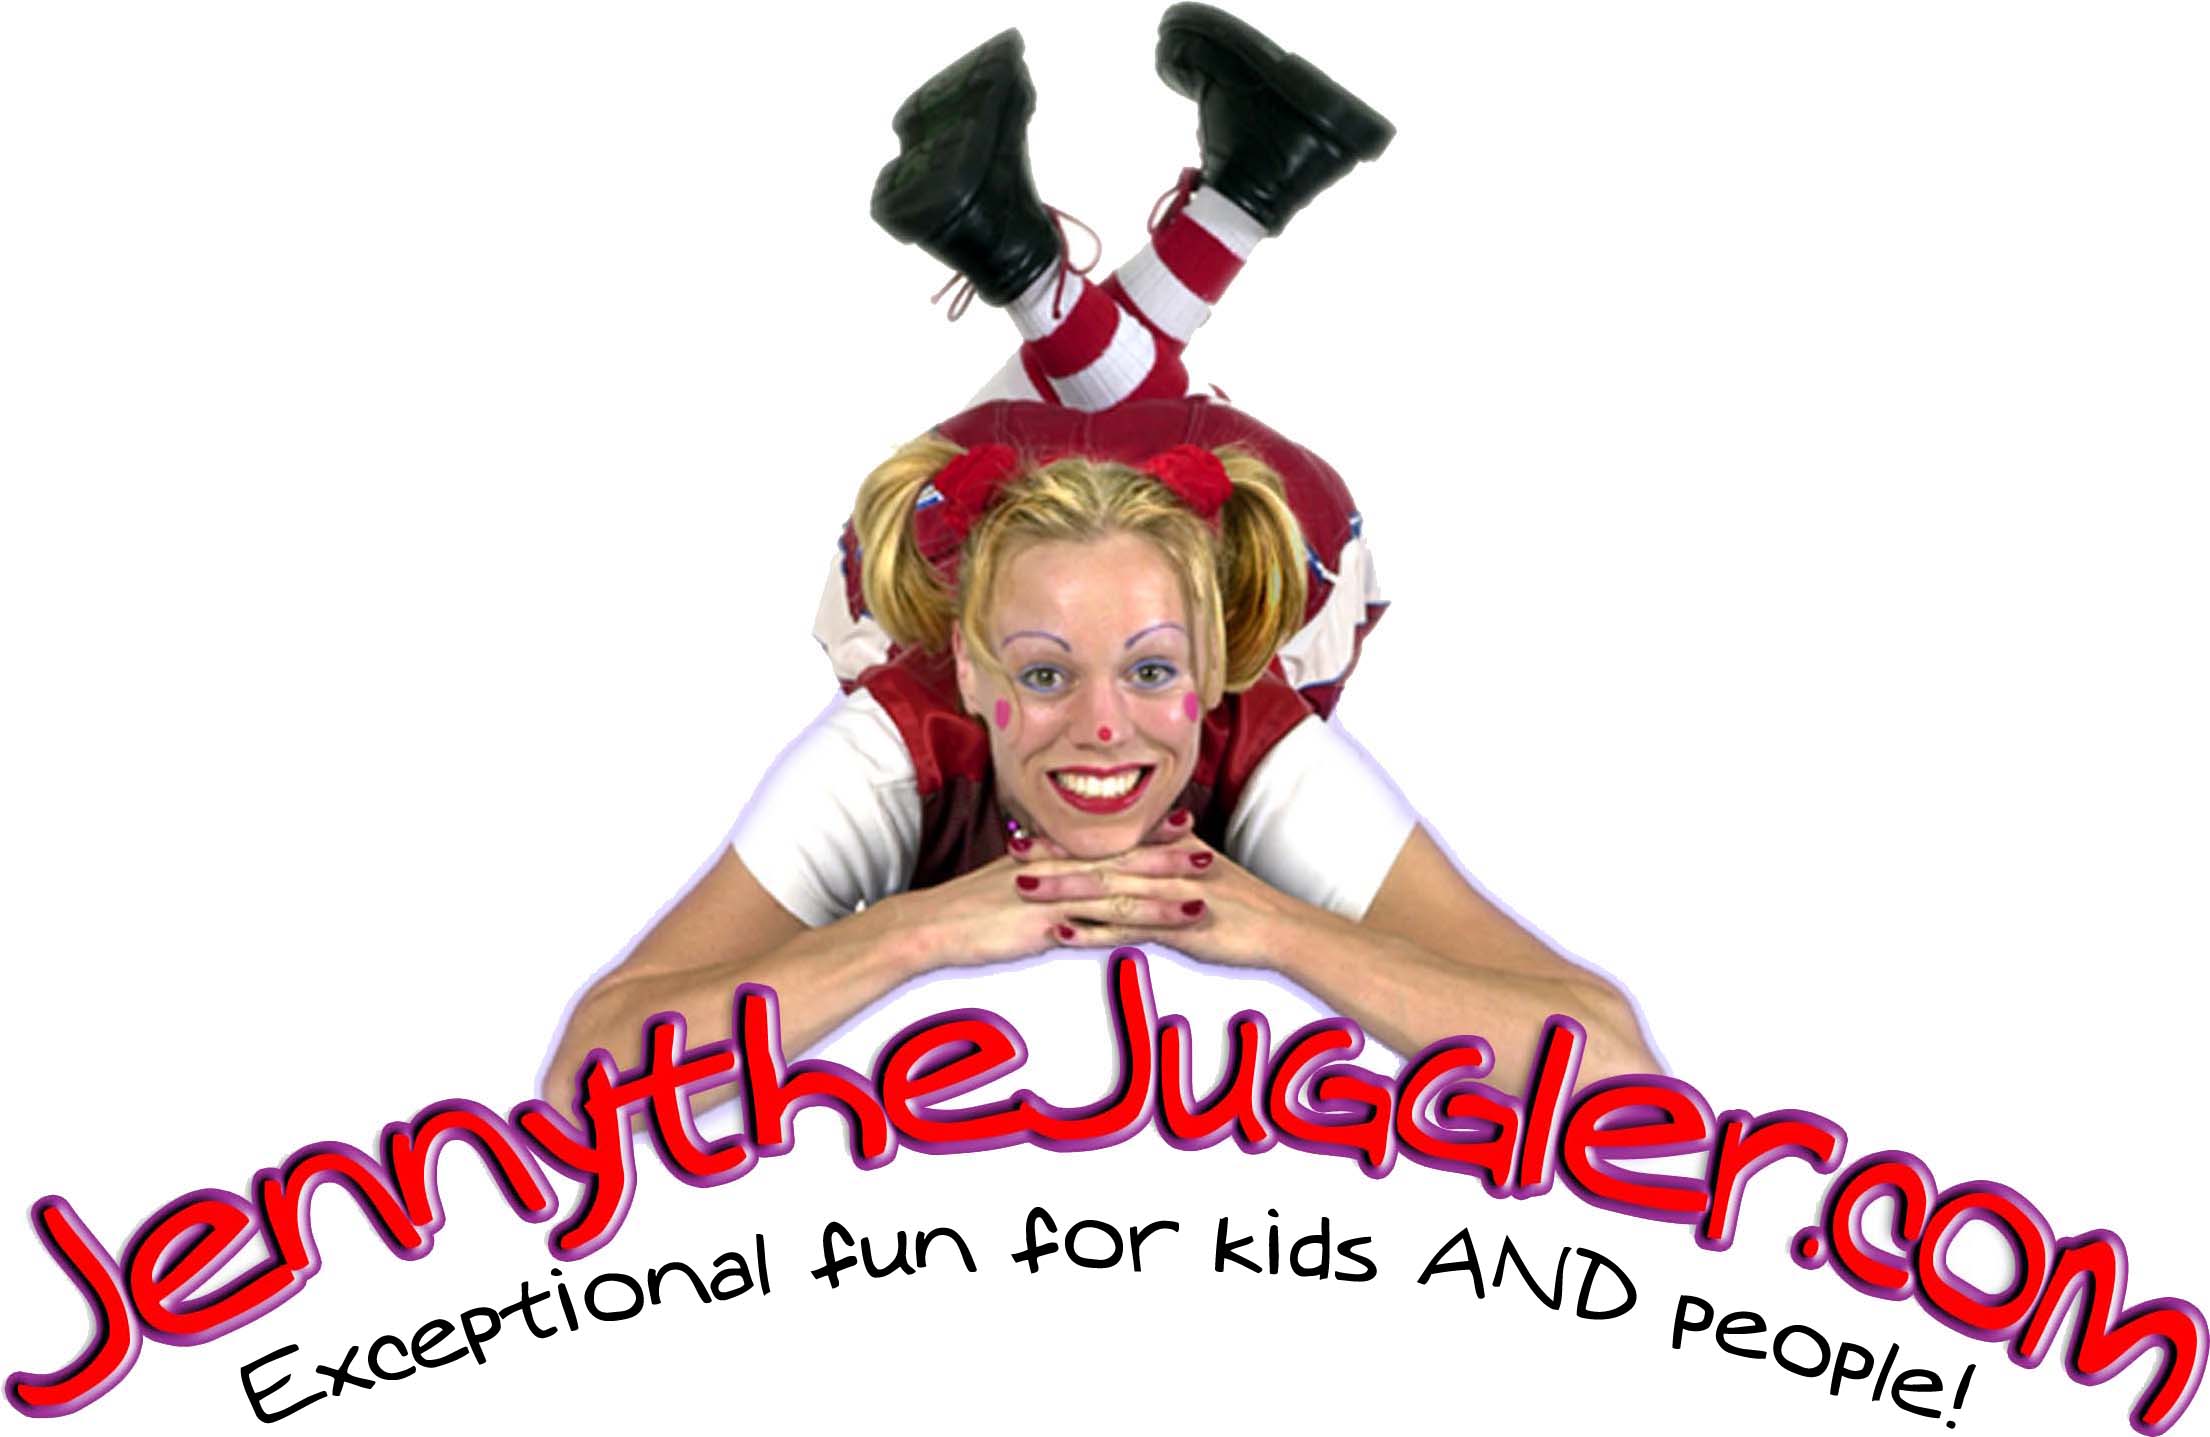 Jenny the Juggler